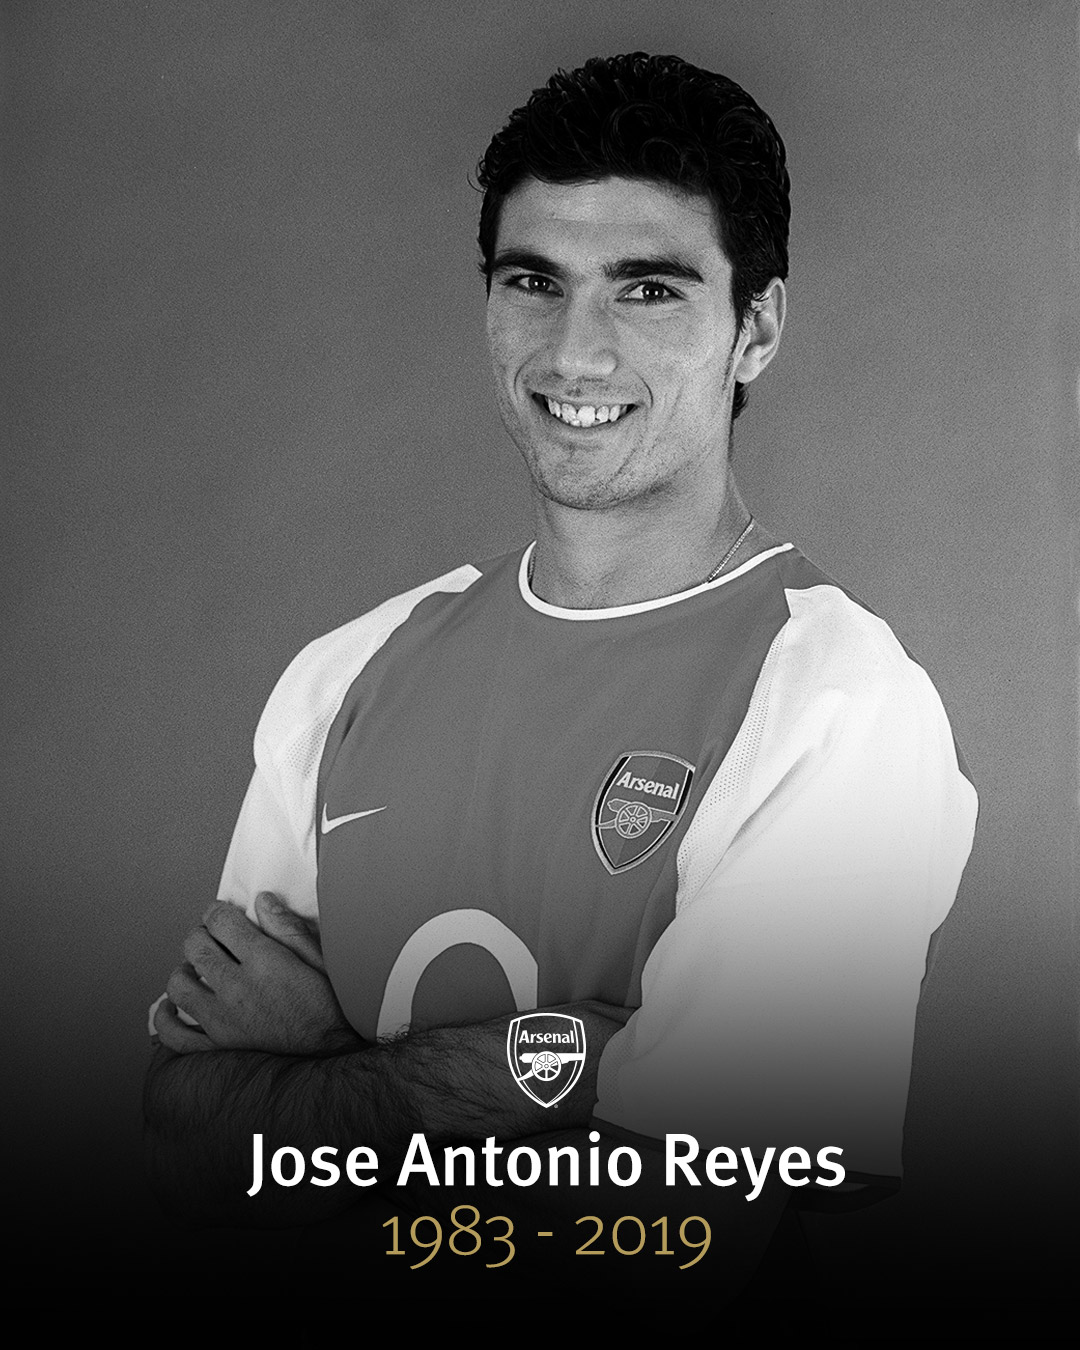 Arsenal Twitter: "Remembering Jose Antonio Reyes. Never forgotten ❤️ https://t.co/22Ye9dJuu0" / Twitter